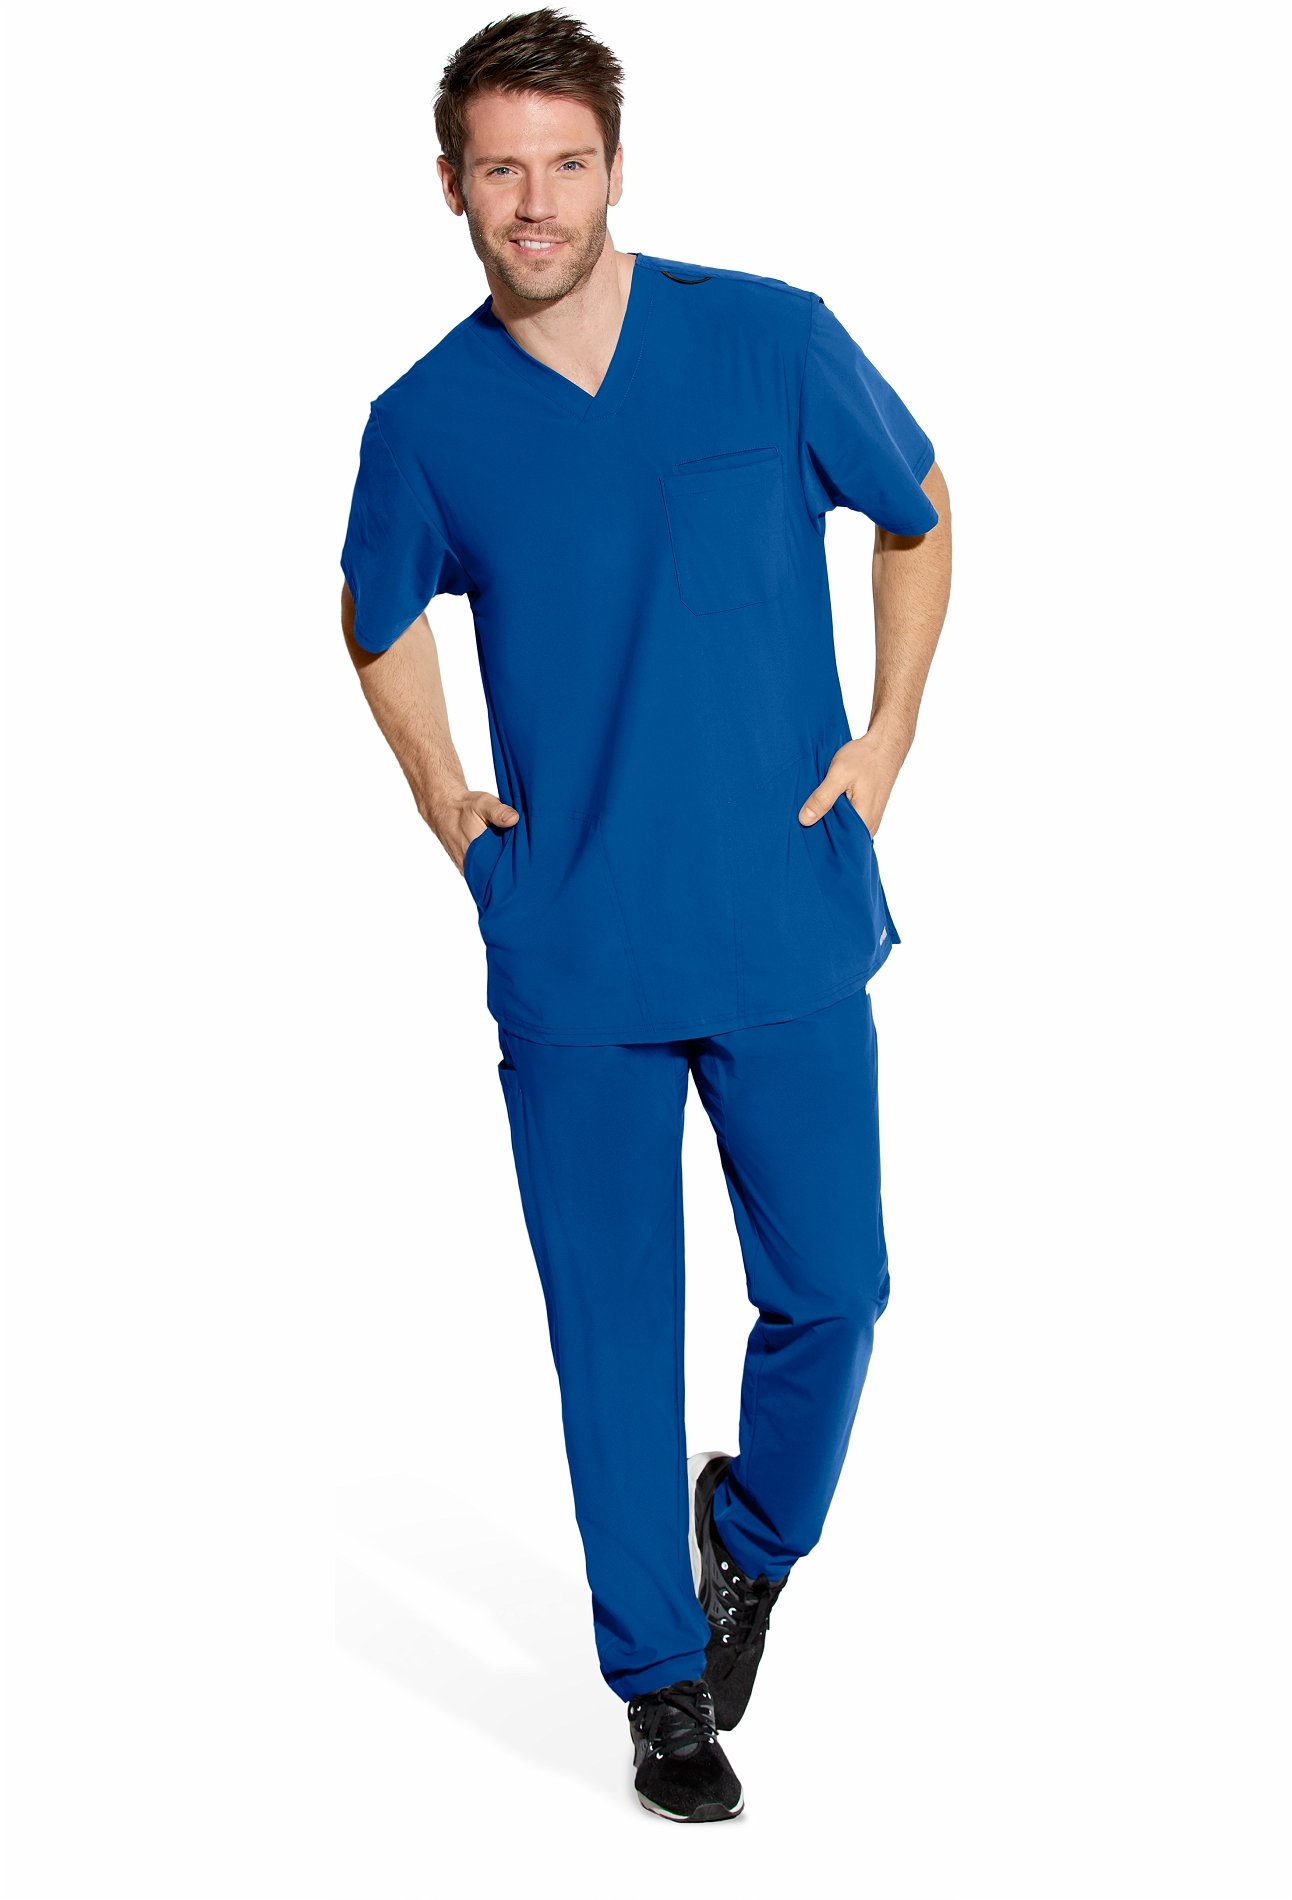 Grey's Anatomy Edge Men's 4 Pocket Scrub Top-GET042 | Medical Scrubs ...